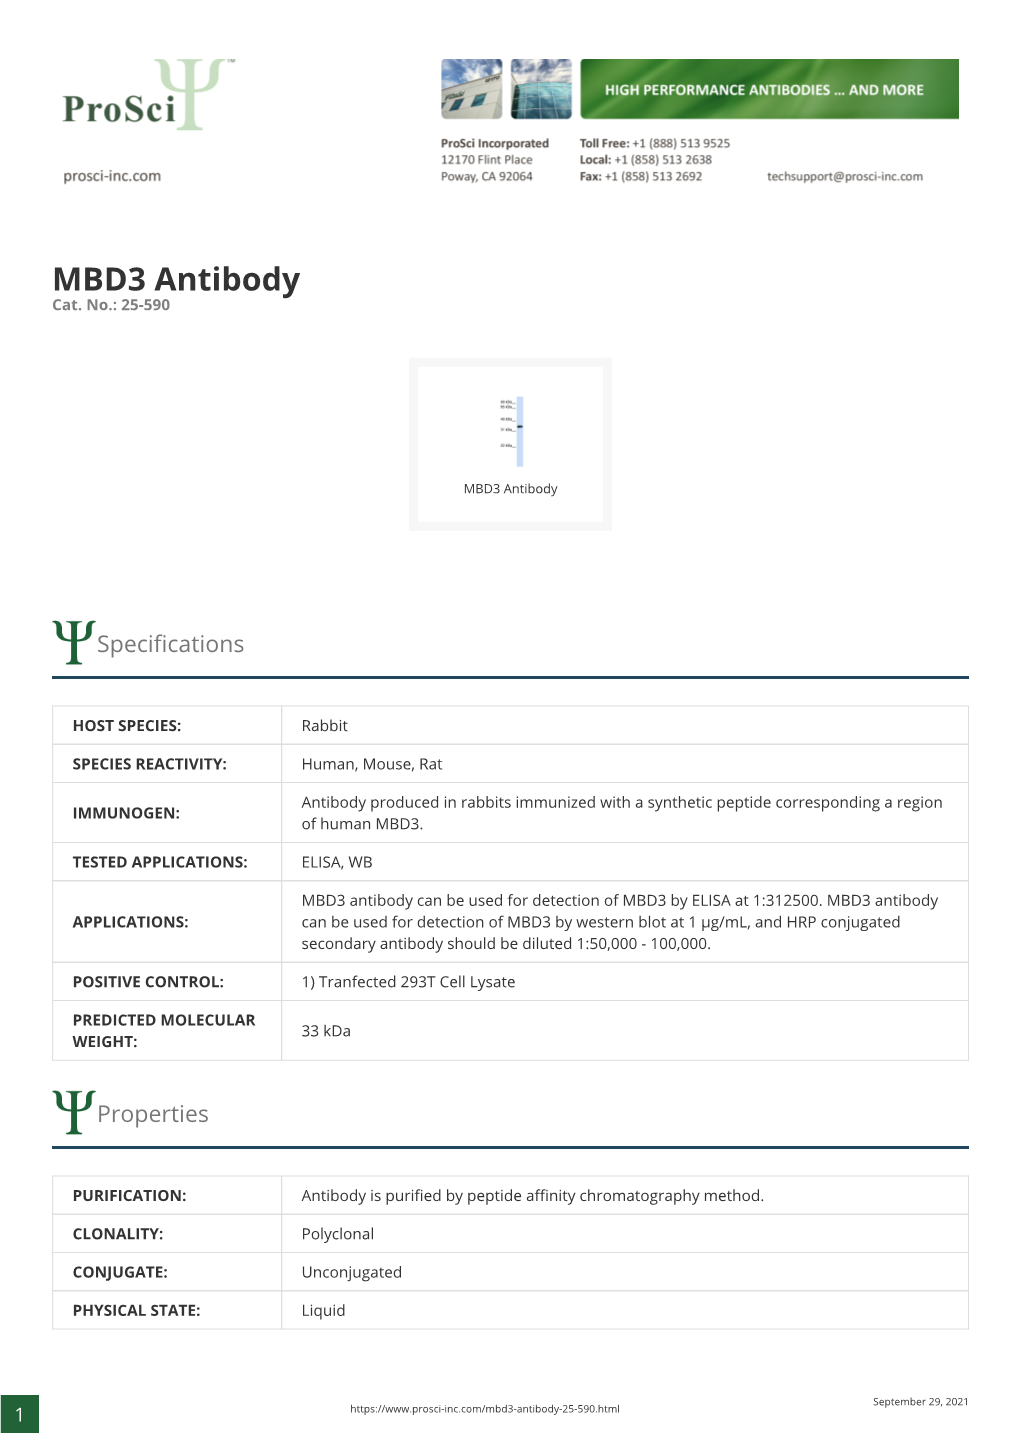 MBD3 Antibody Cat